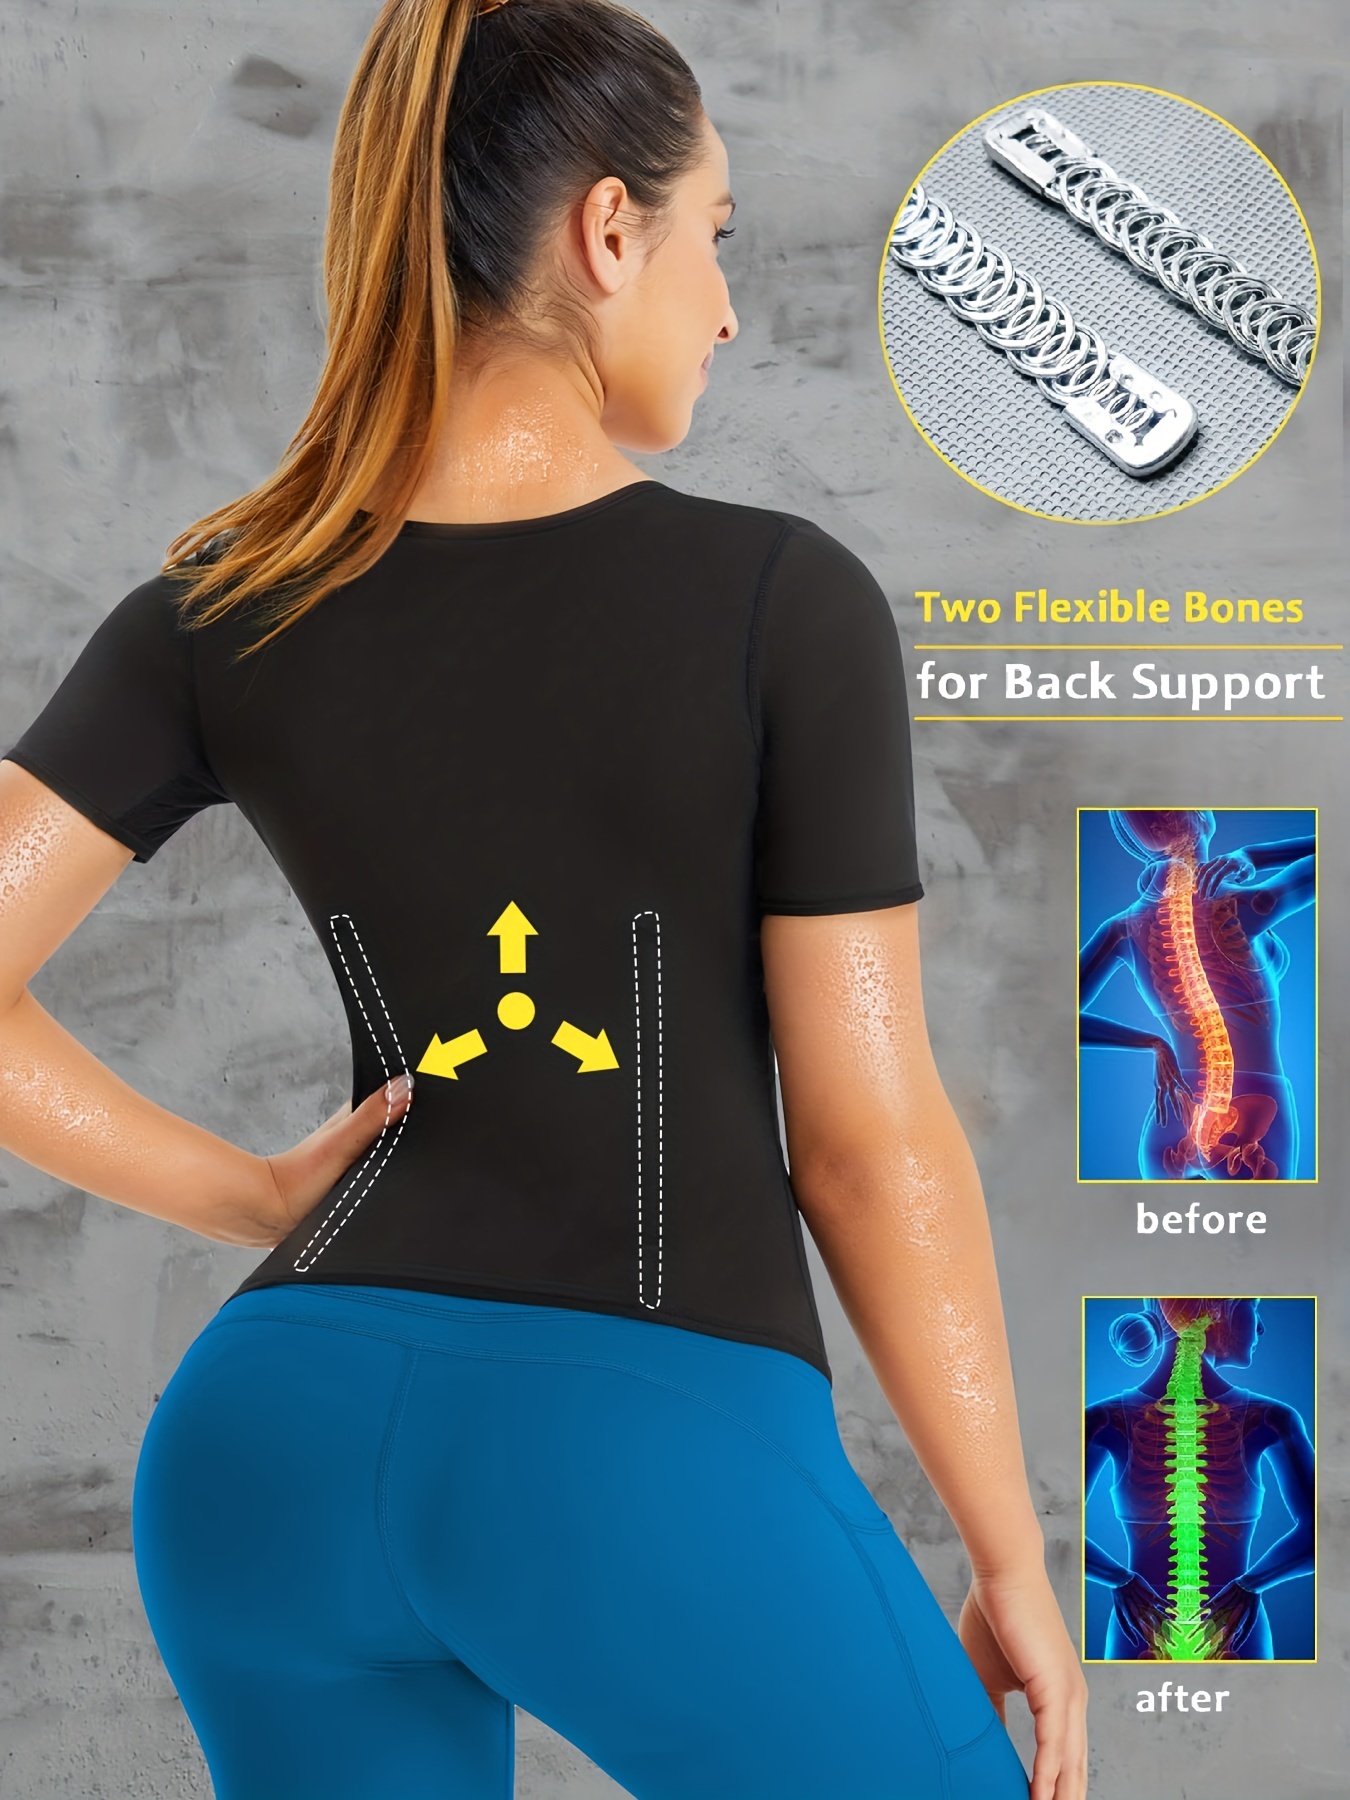 Gotoly Women Back Braces Posture Corrector Waist Trainer Vest